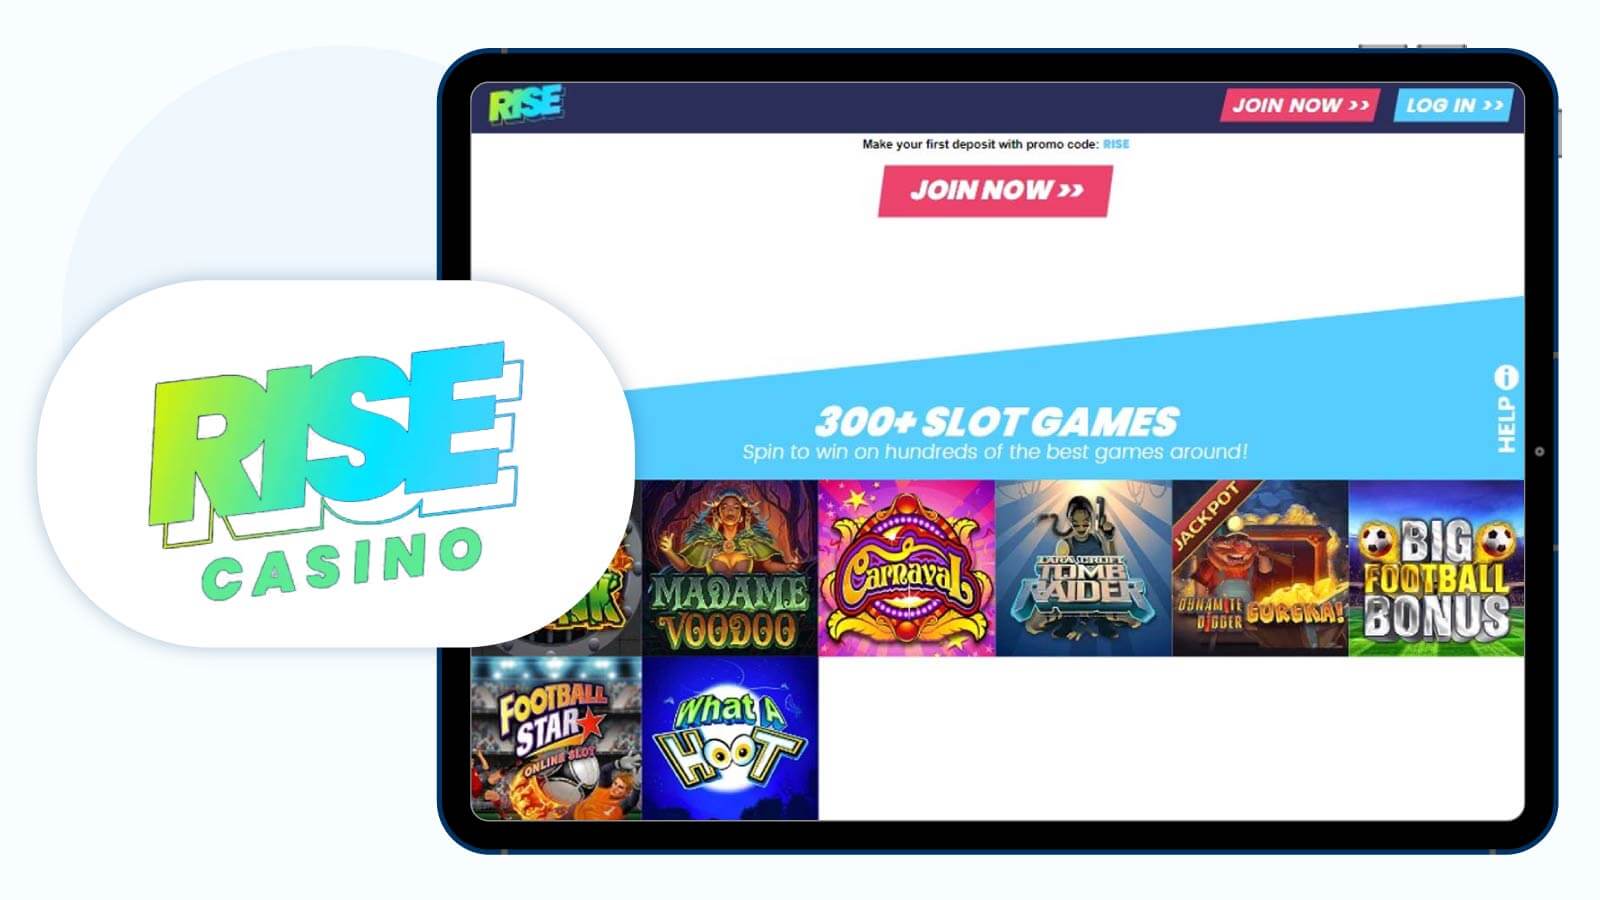 Rise Casino - Fastest Withdrawal £20 Deposit Bonus